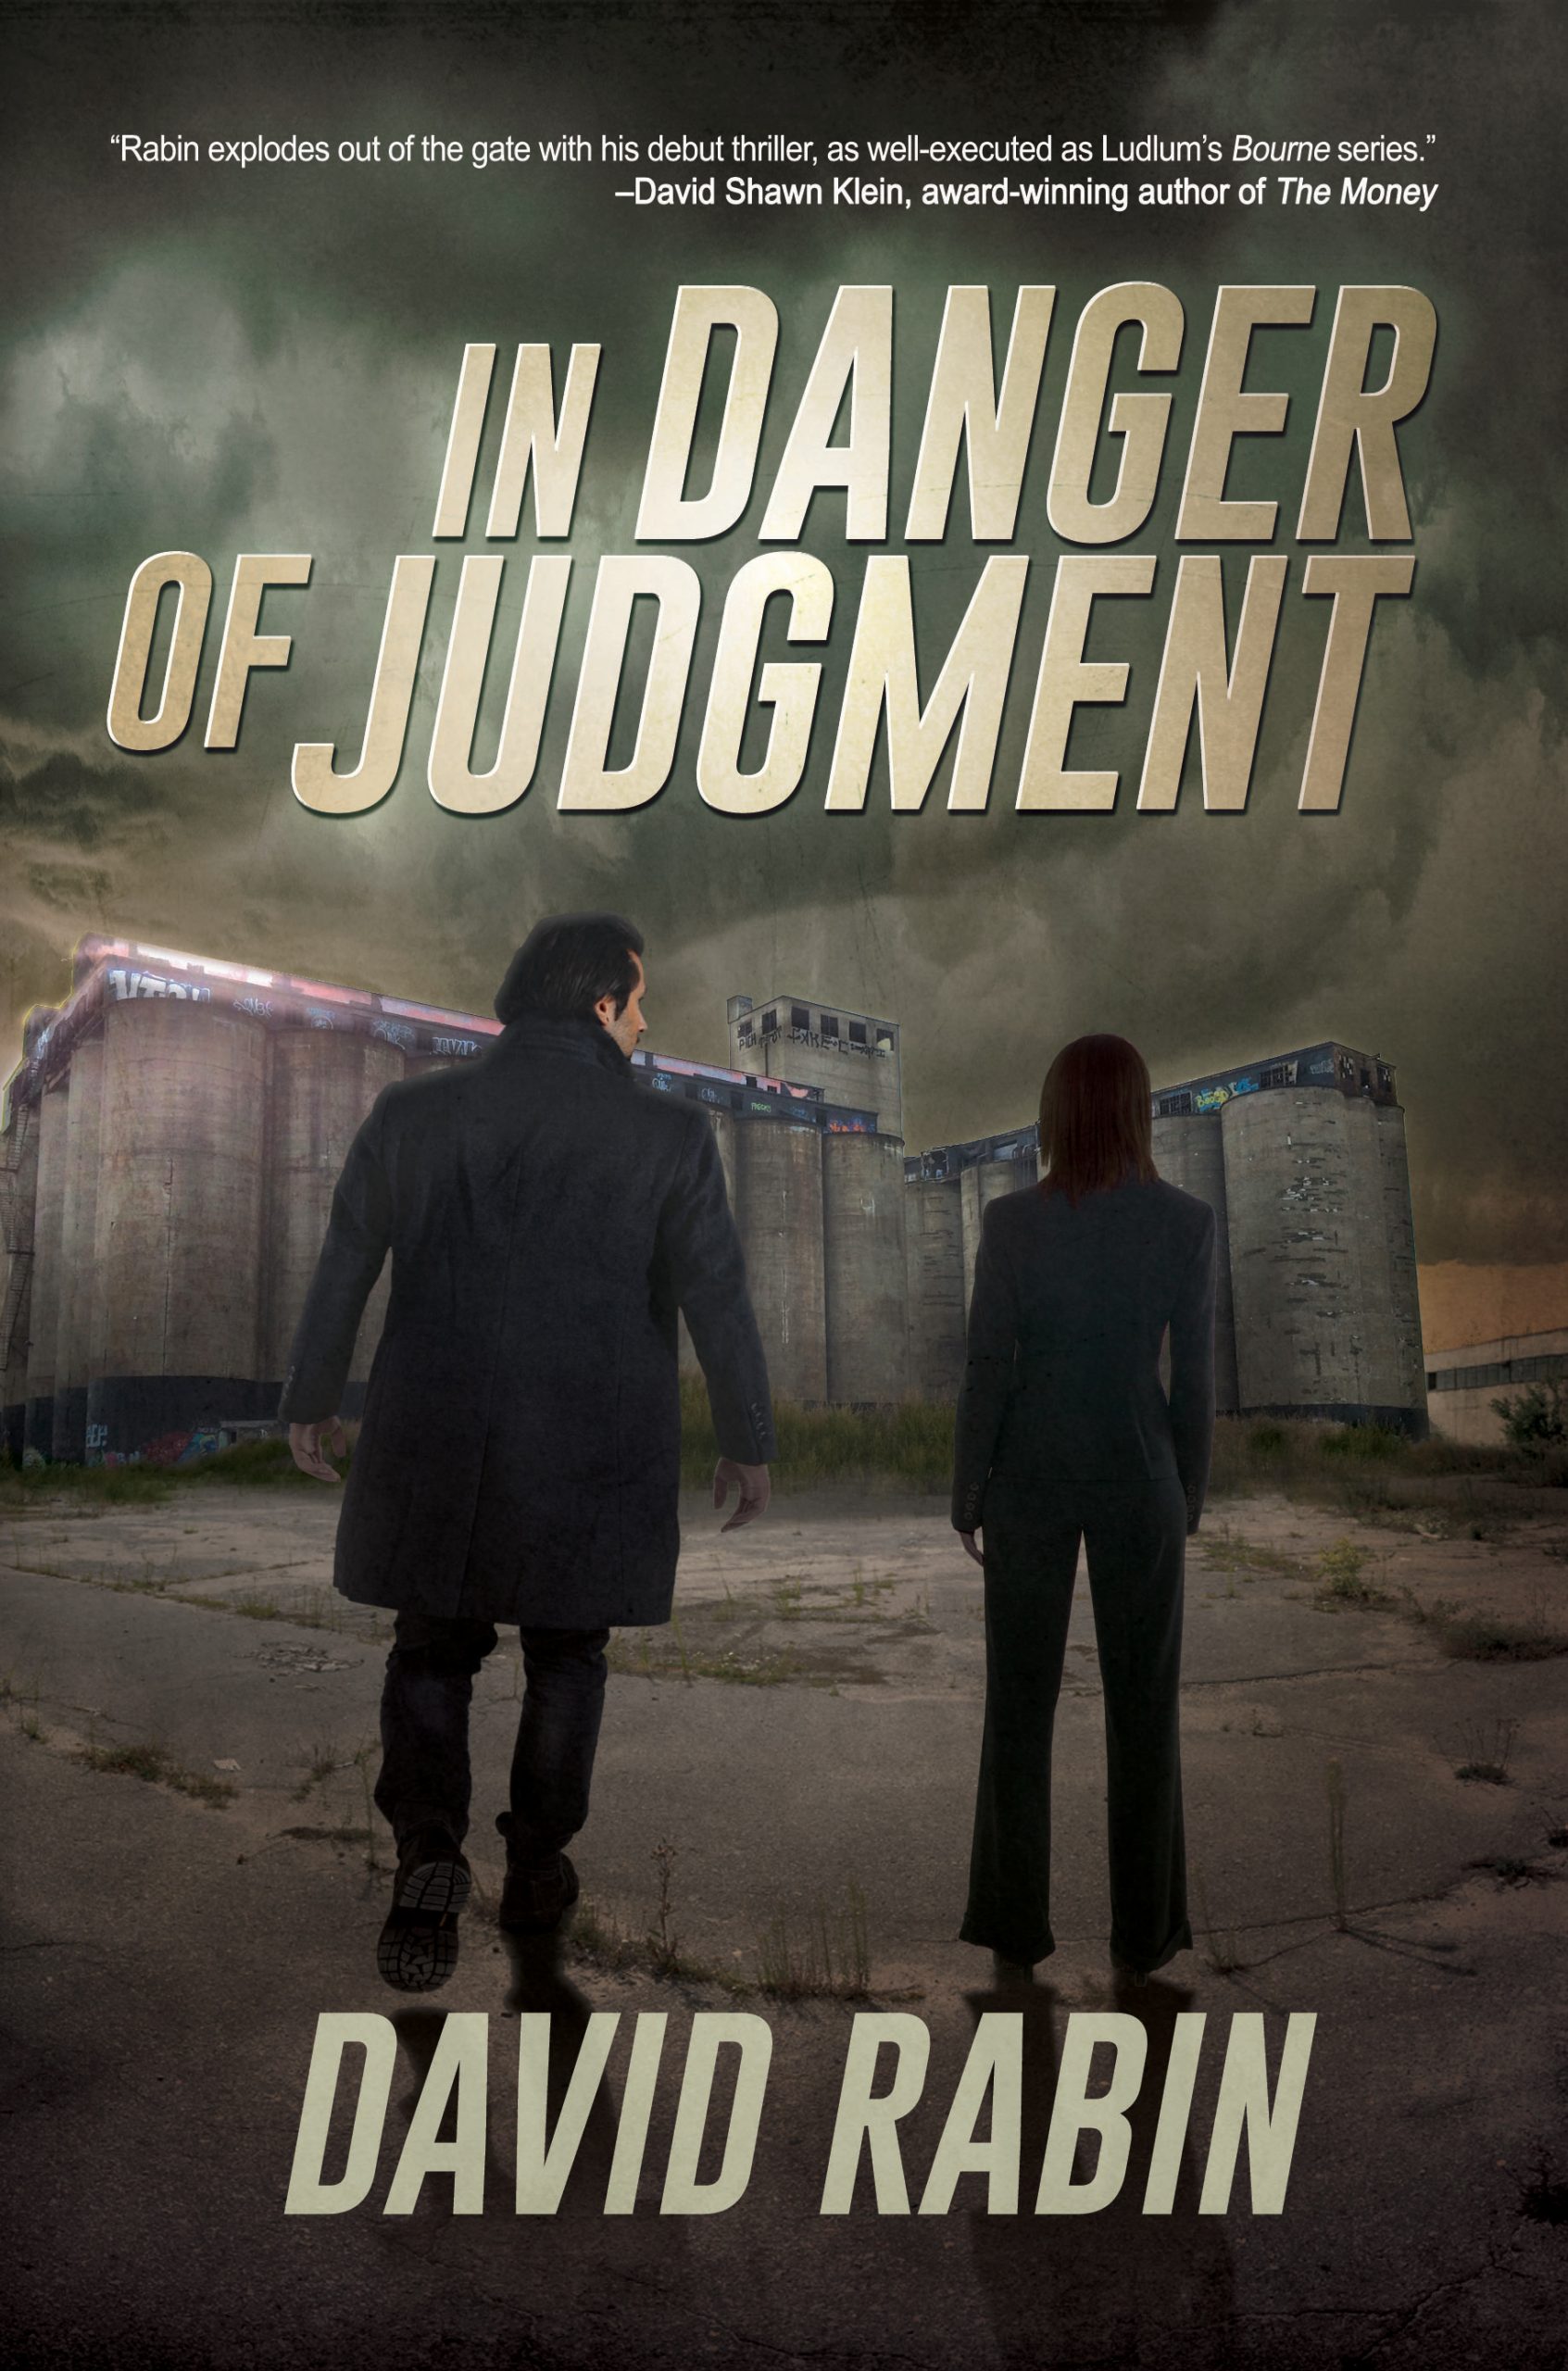 In Danger of Judgment by David Rabin